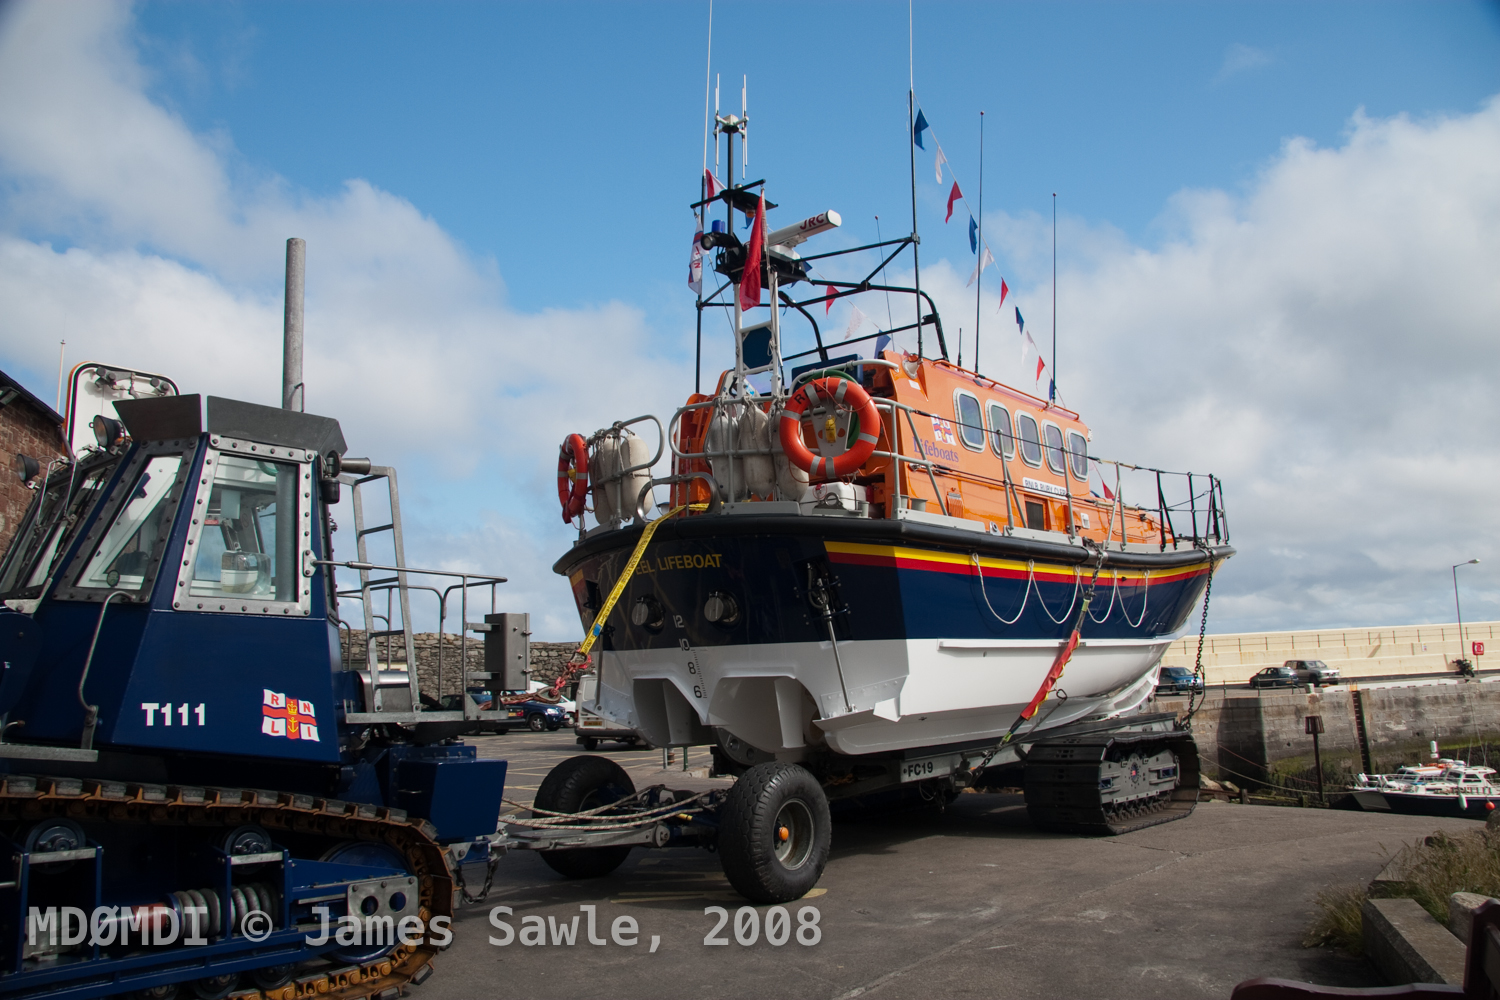 RNLI Lifeboat in Peel on the slipway